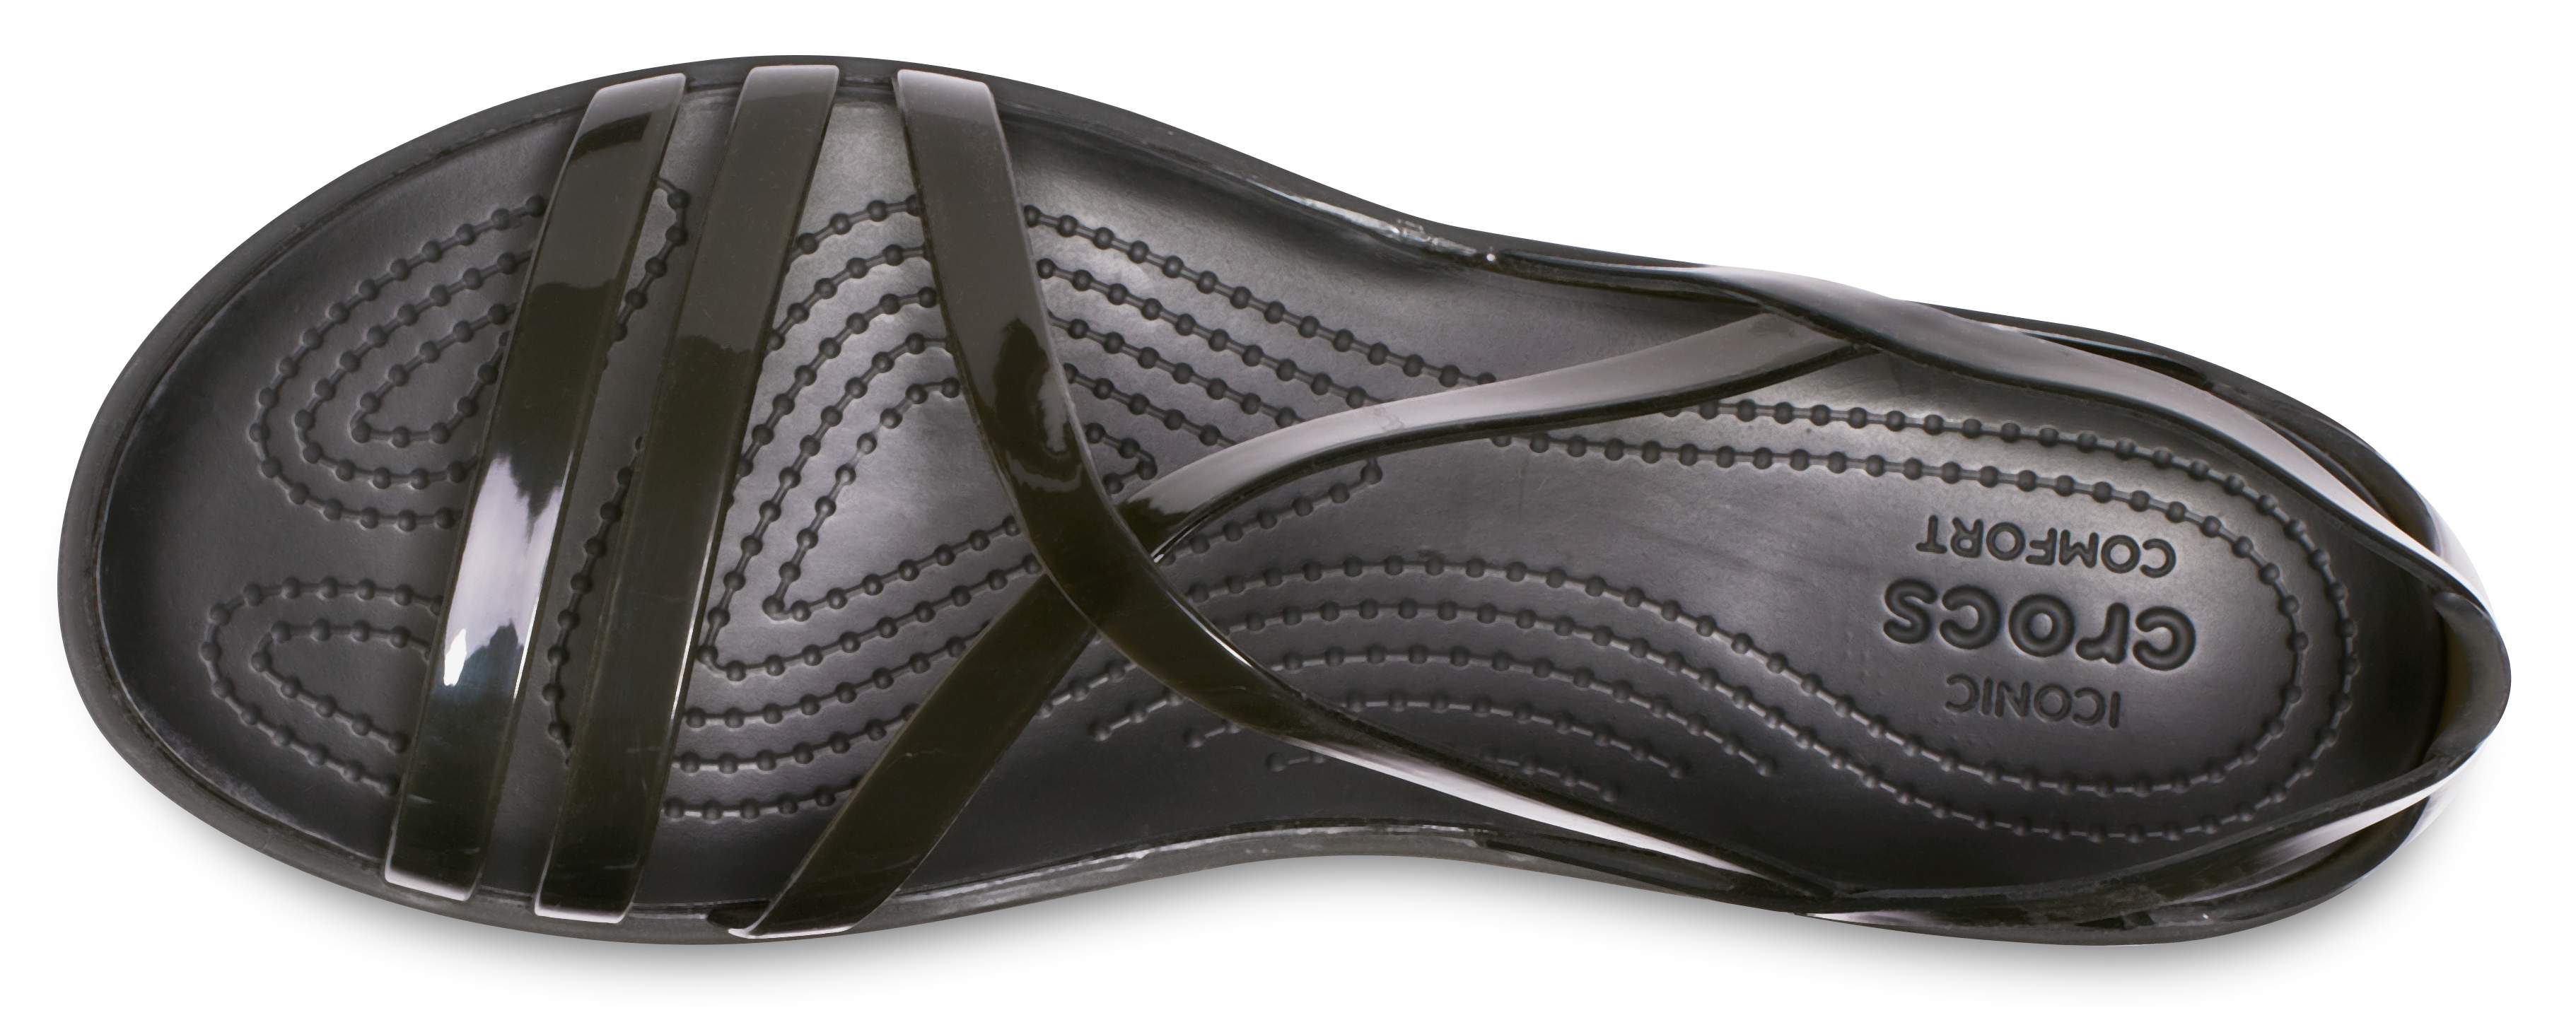 crocs isabella strappy sandal black